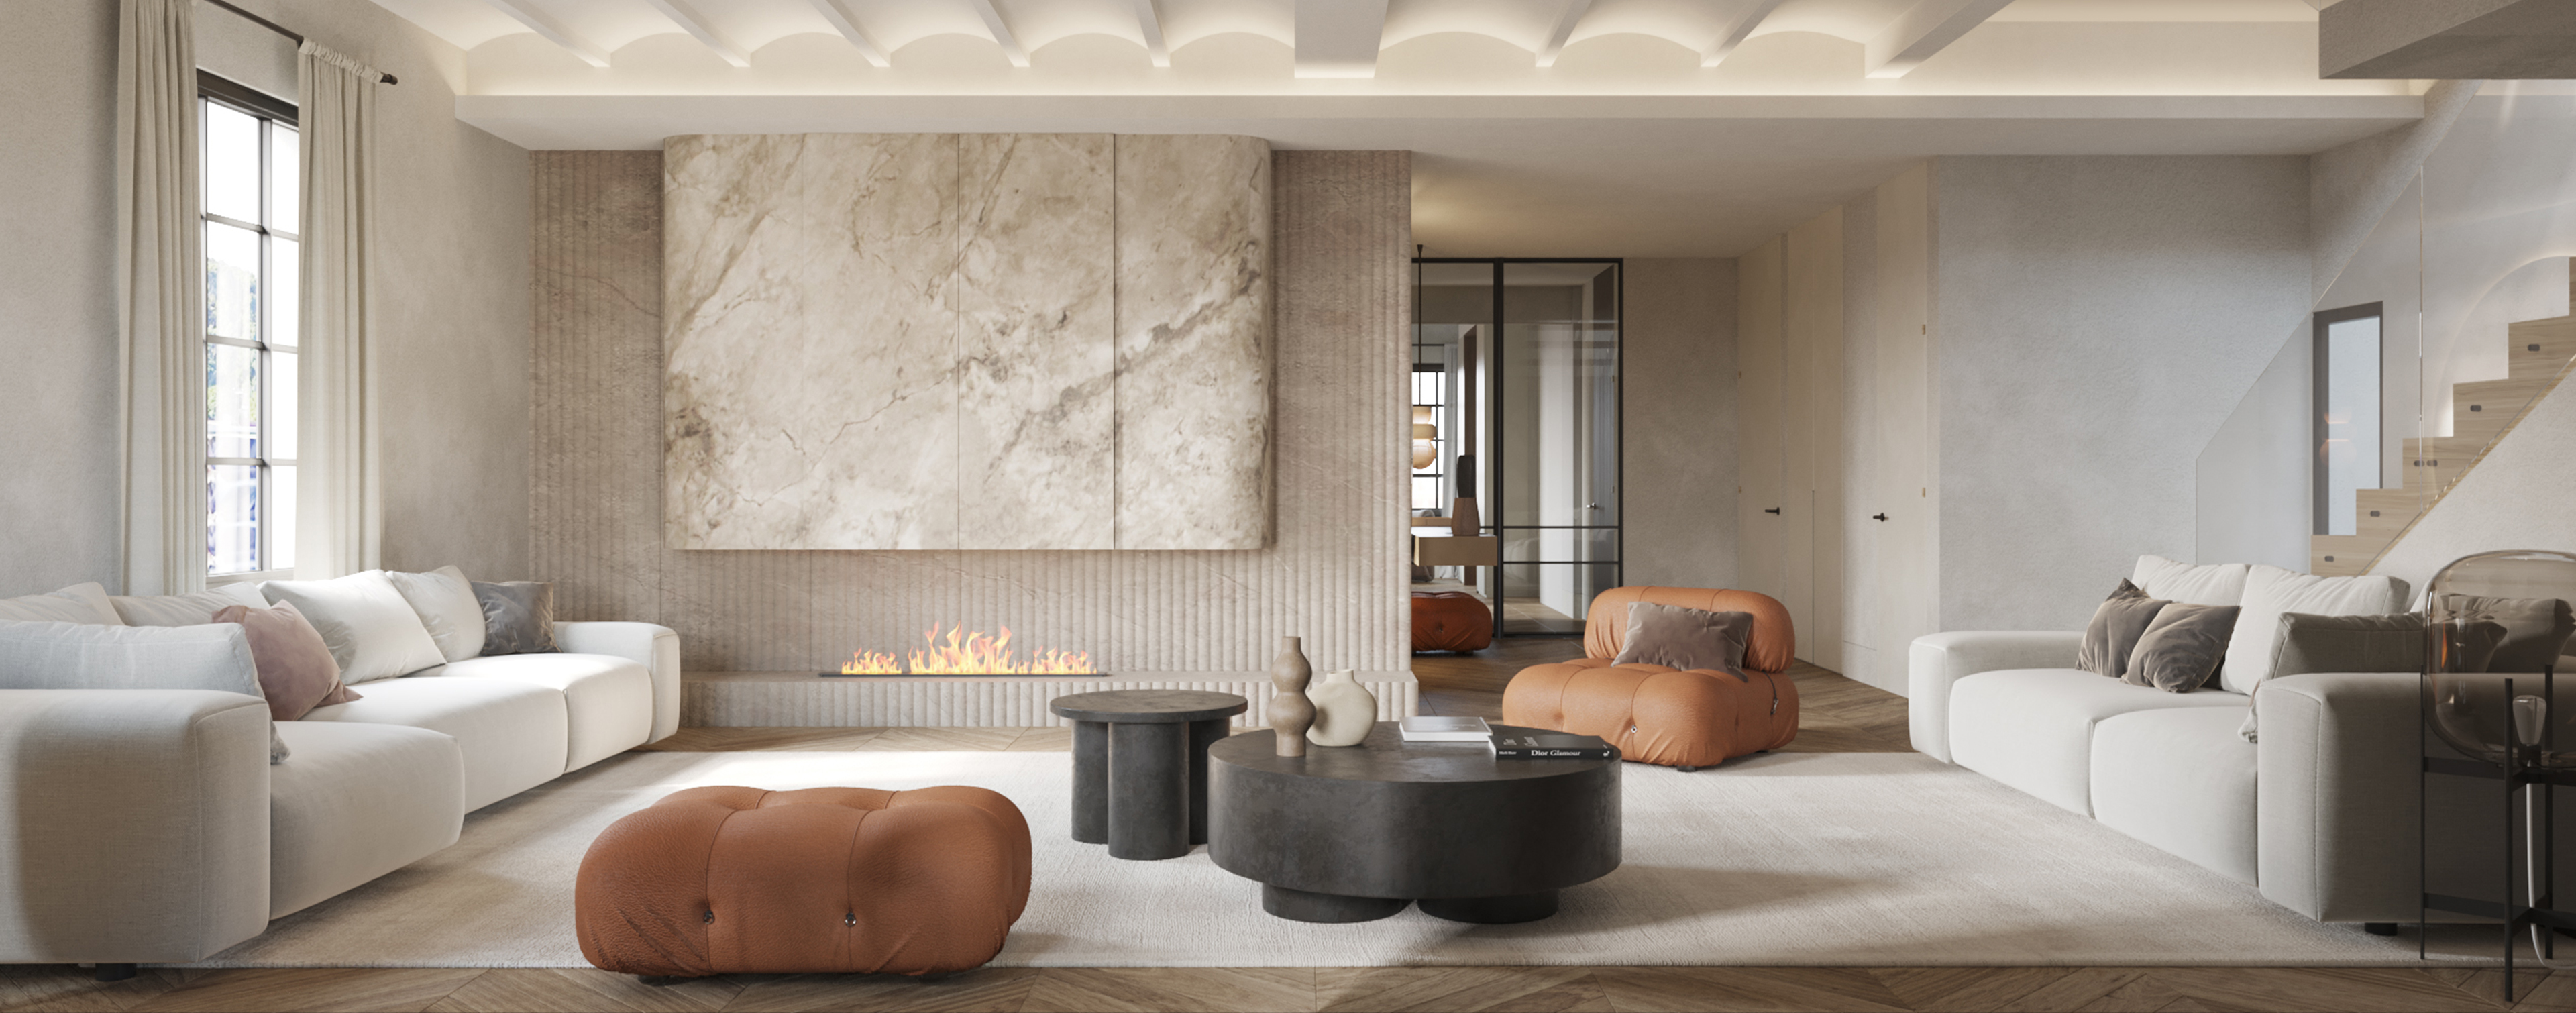 luv studio luxury architects barcelona pedralbes penthouse IMG 01 - LUV Studio - Architecture & Design - Barcelona